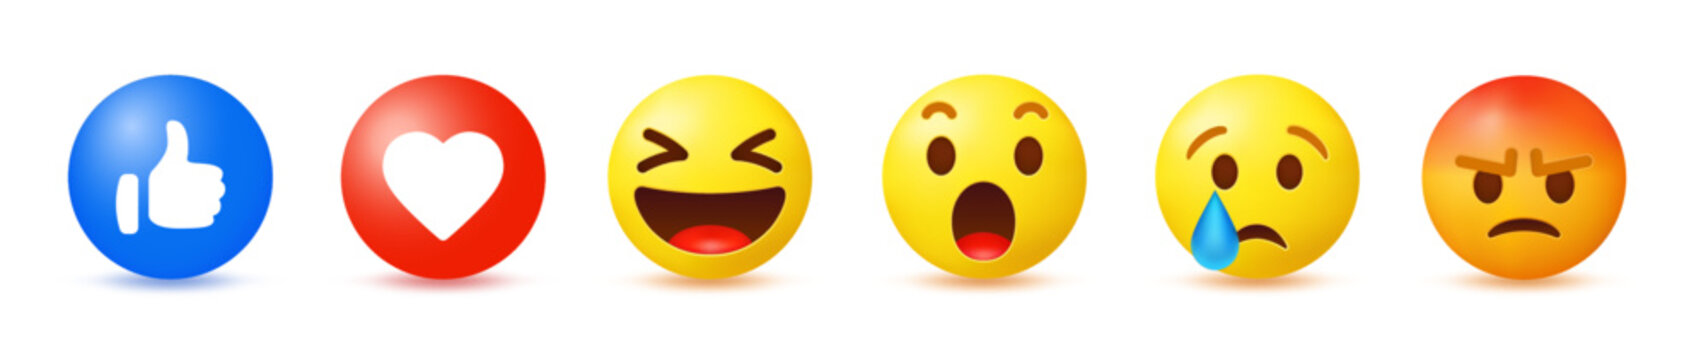 Facebook emoji. Official Facebook Reactions Vector. Collection of Emoji Reactions for Social Network. Facebook Meta emoji smiles